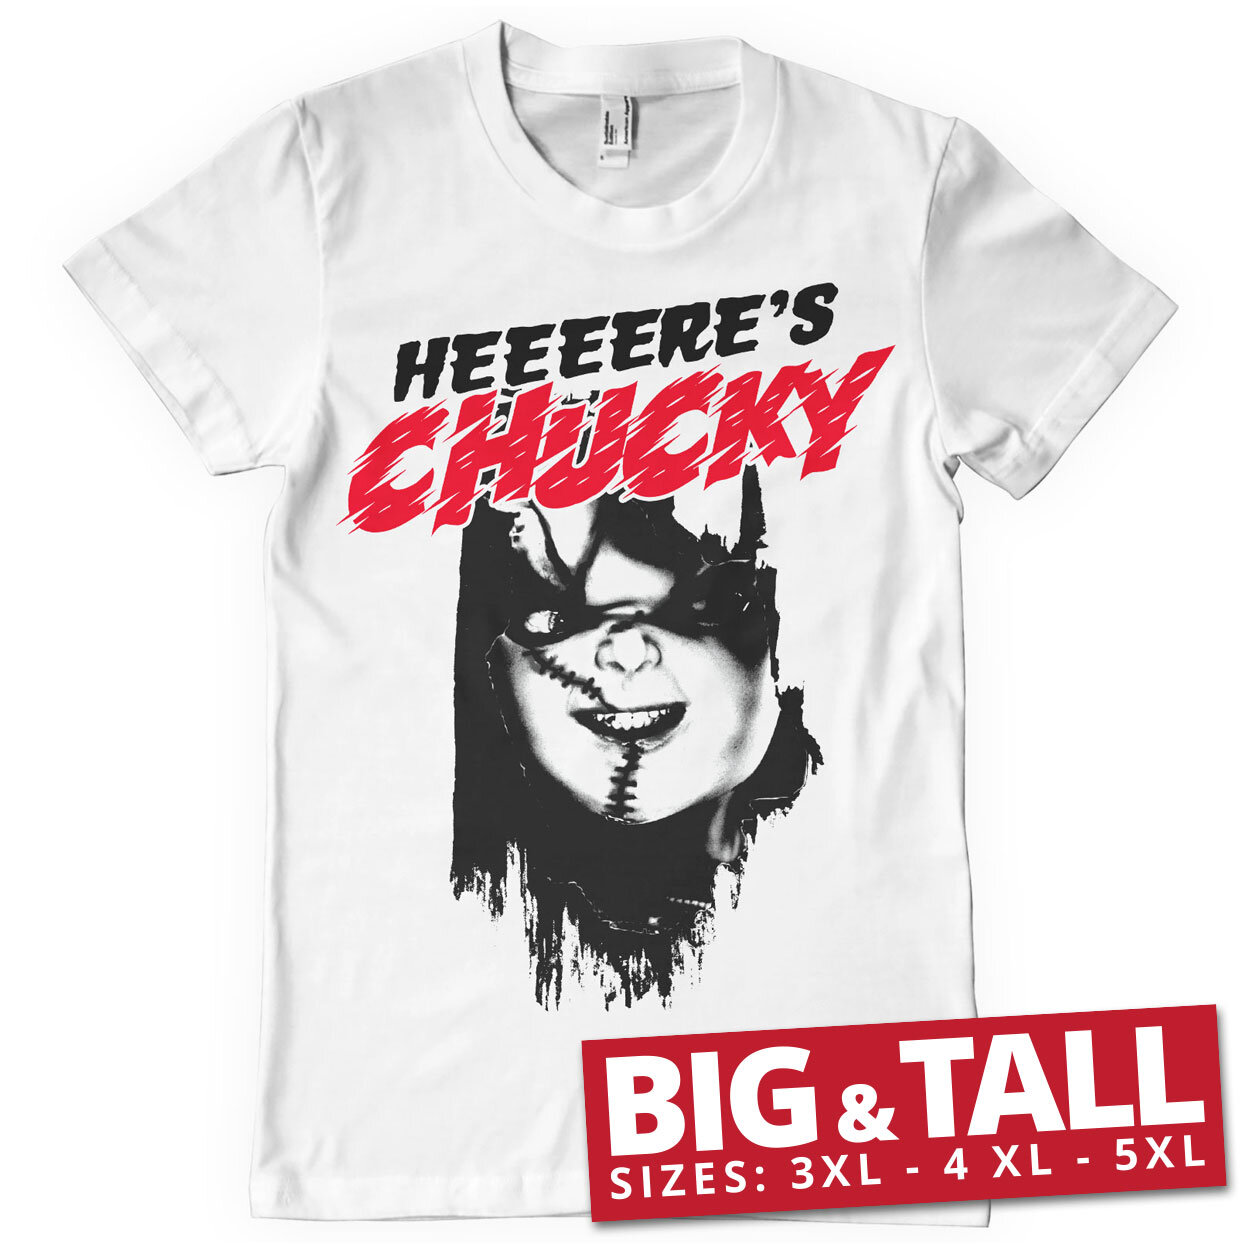 Heeere's Chucky Big & Tall T-Shirt